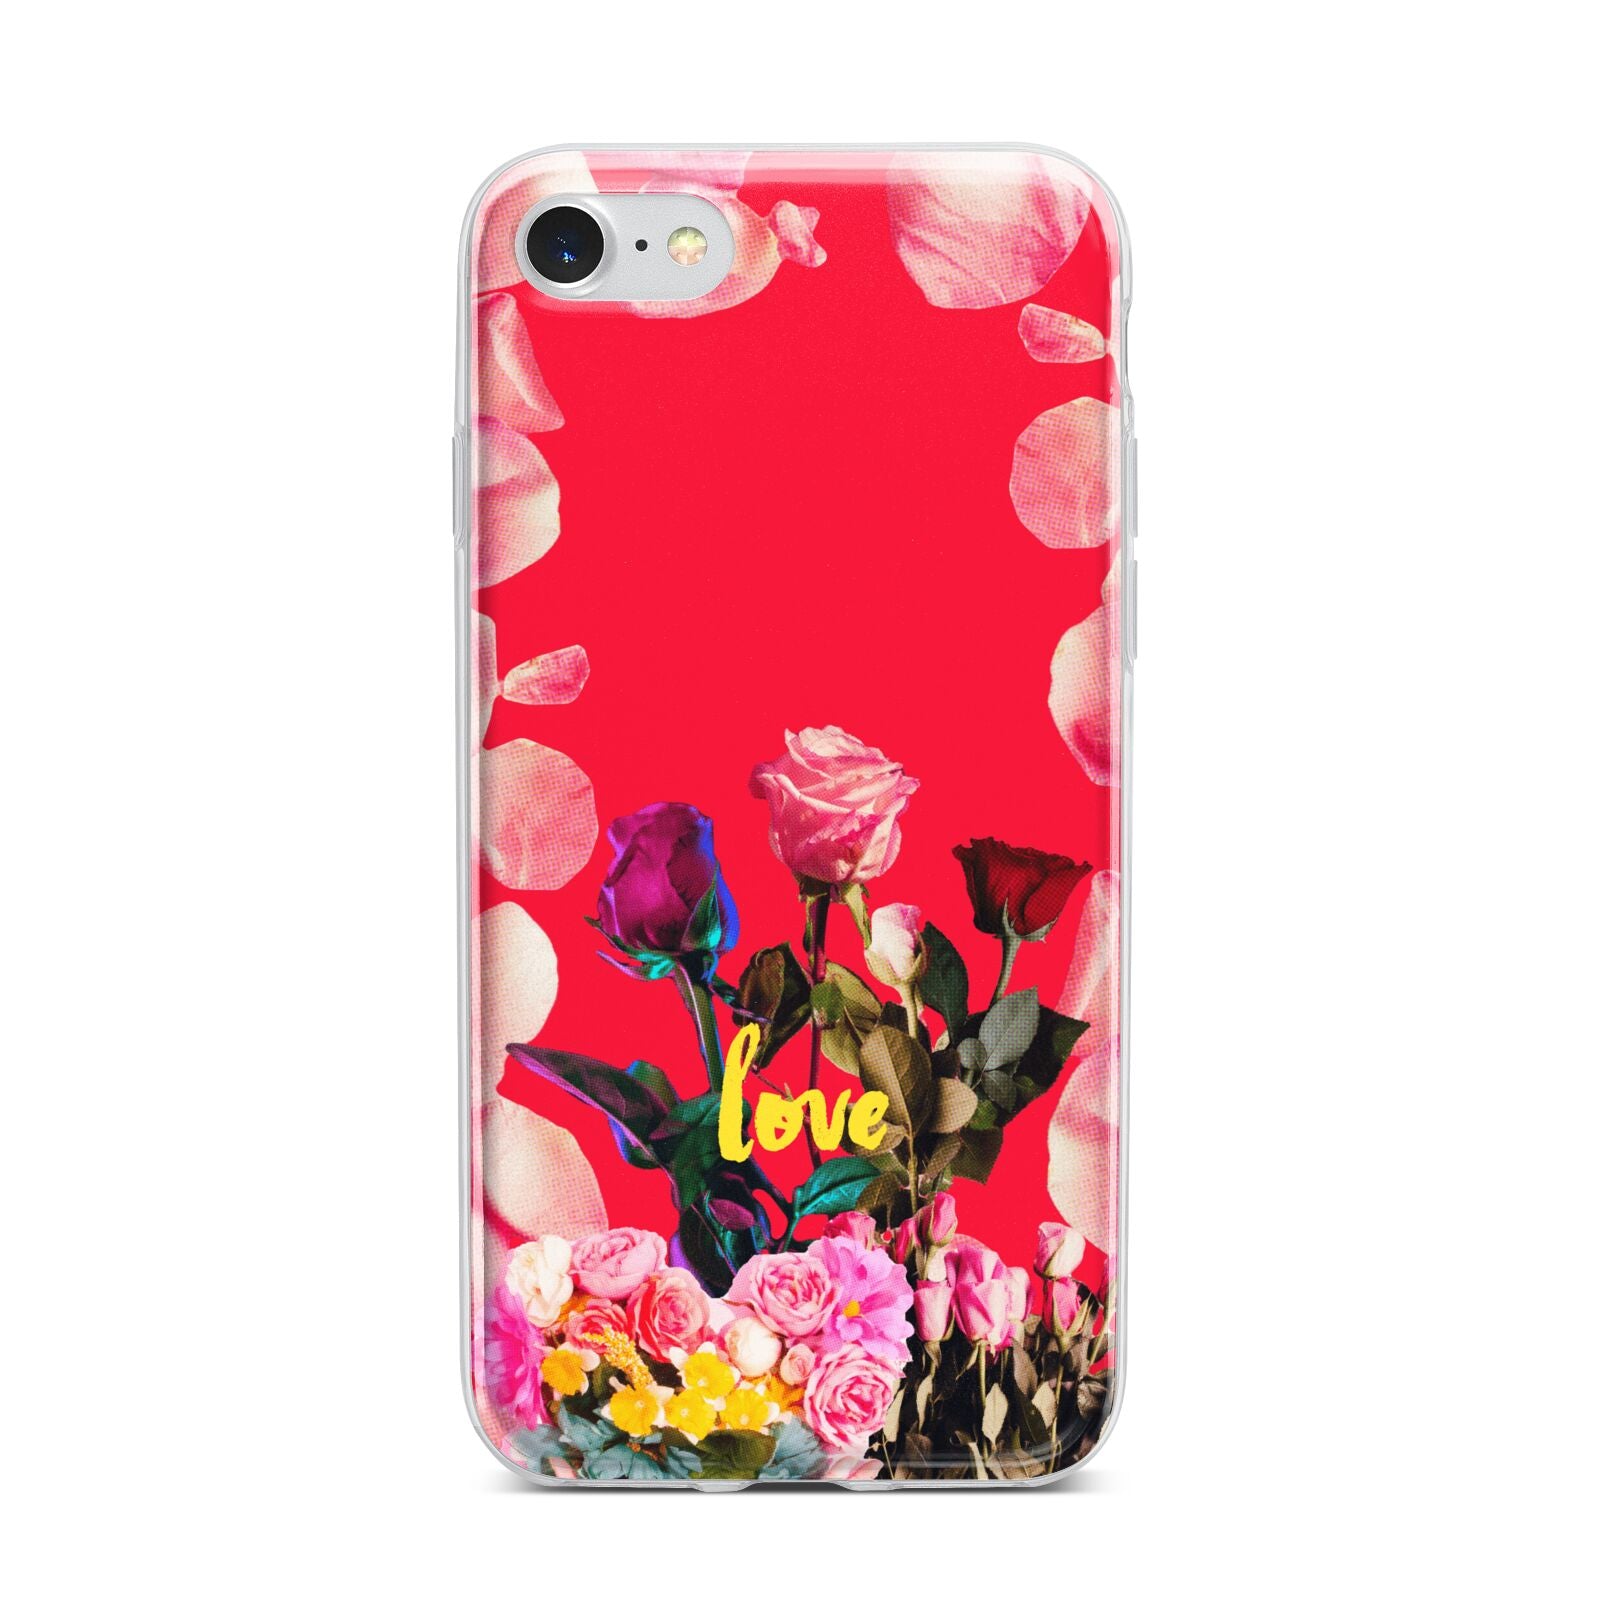 Retro Floral Valentine iPhone 7 Bumper Case on Silver iPhone